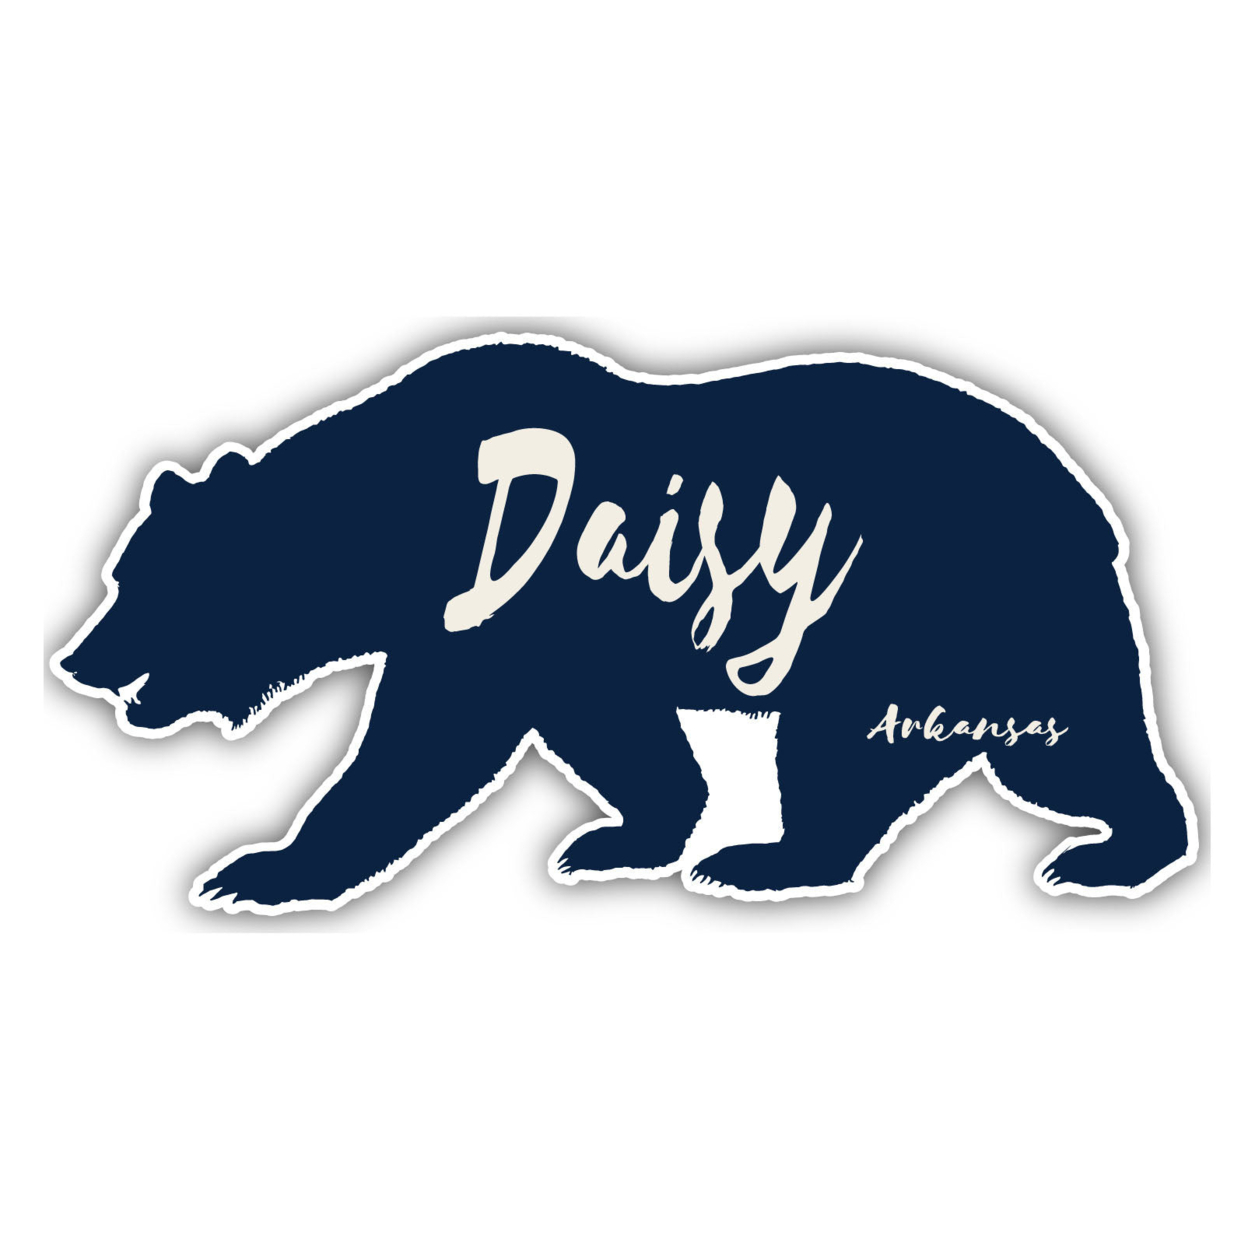 Daisy Arkansas Souvenir Decorative Stickers (Choose Theme And Size) - 4-Pack, 4-Inch, Bear